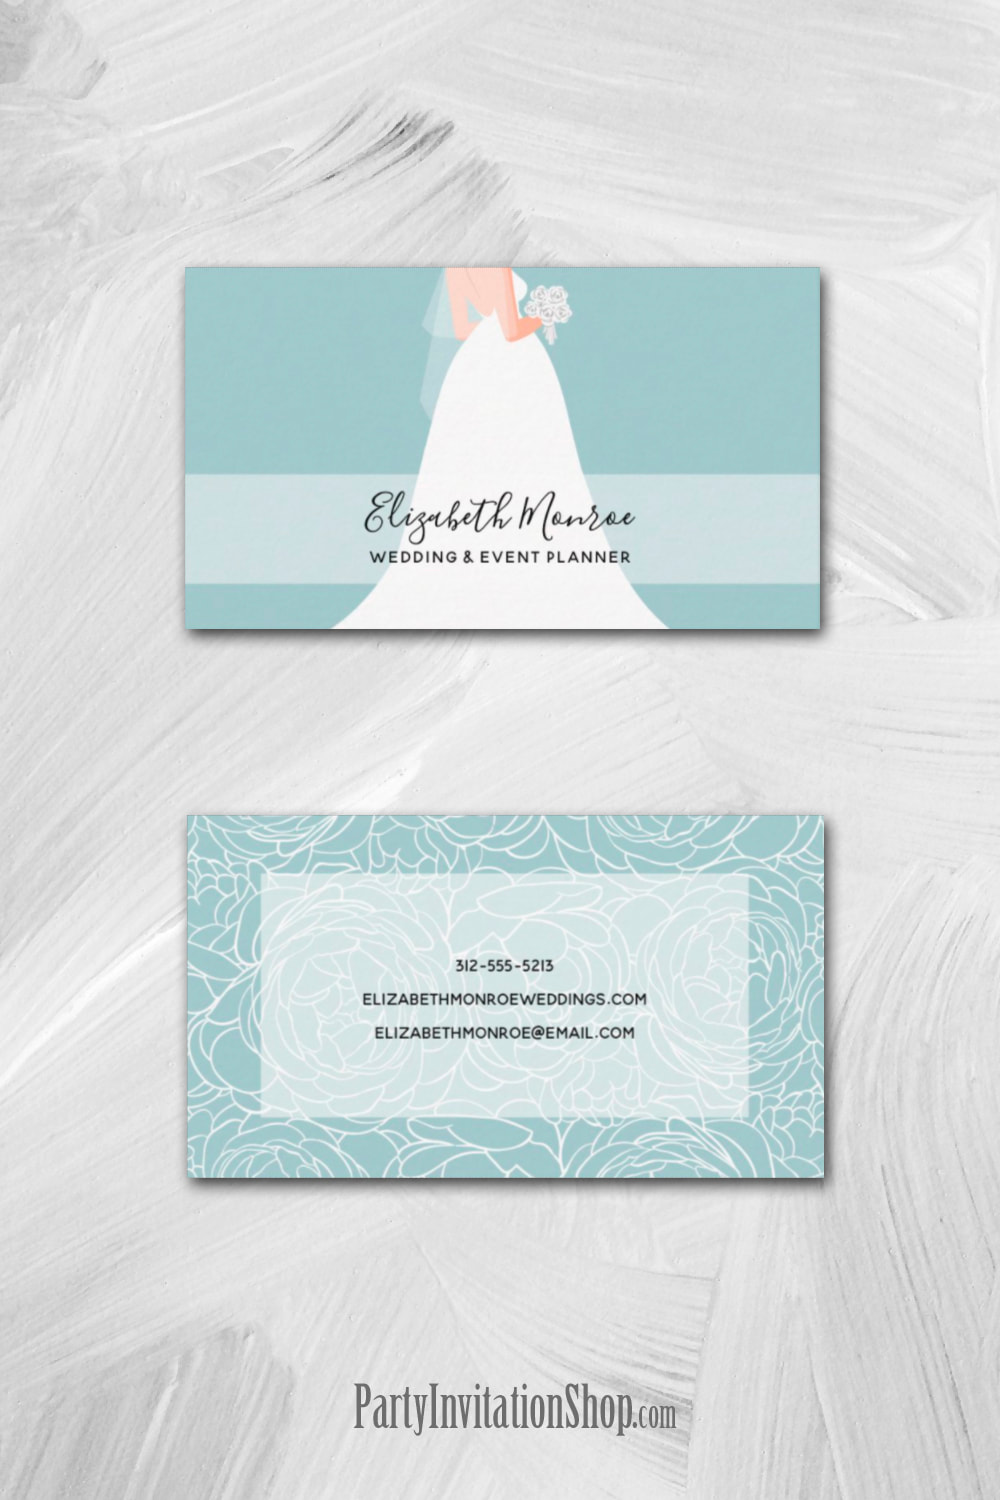 Elegant Dusty Blue Wedding Event Planner Business Cards